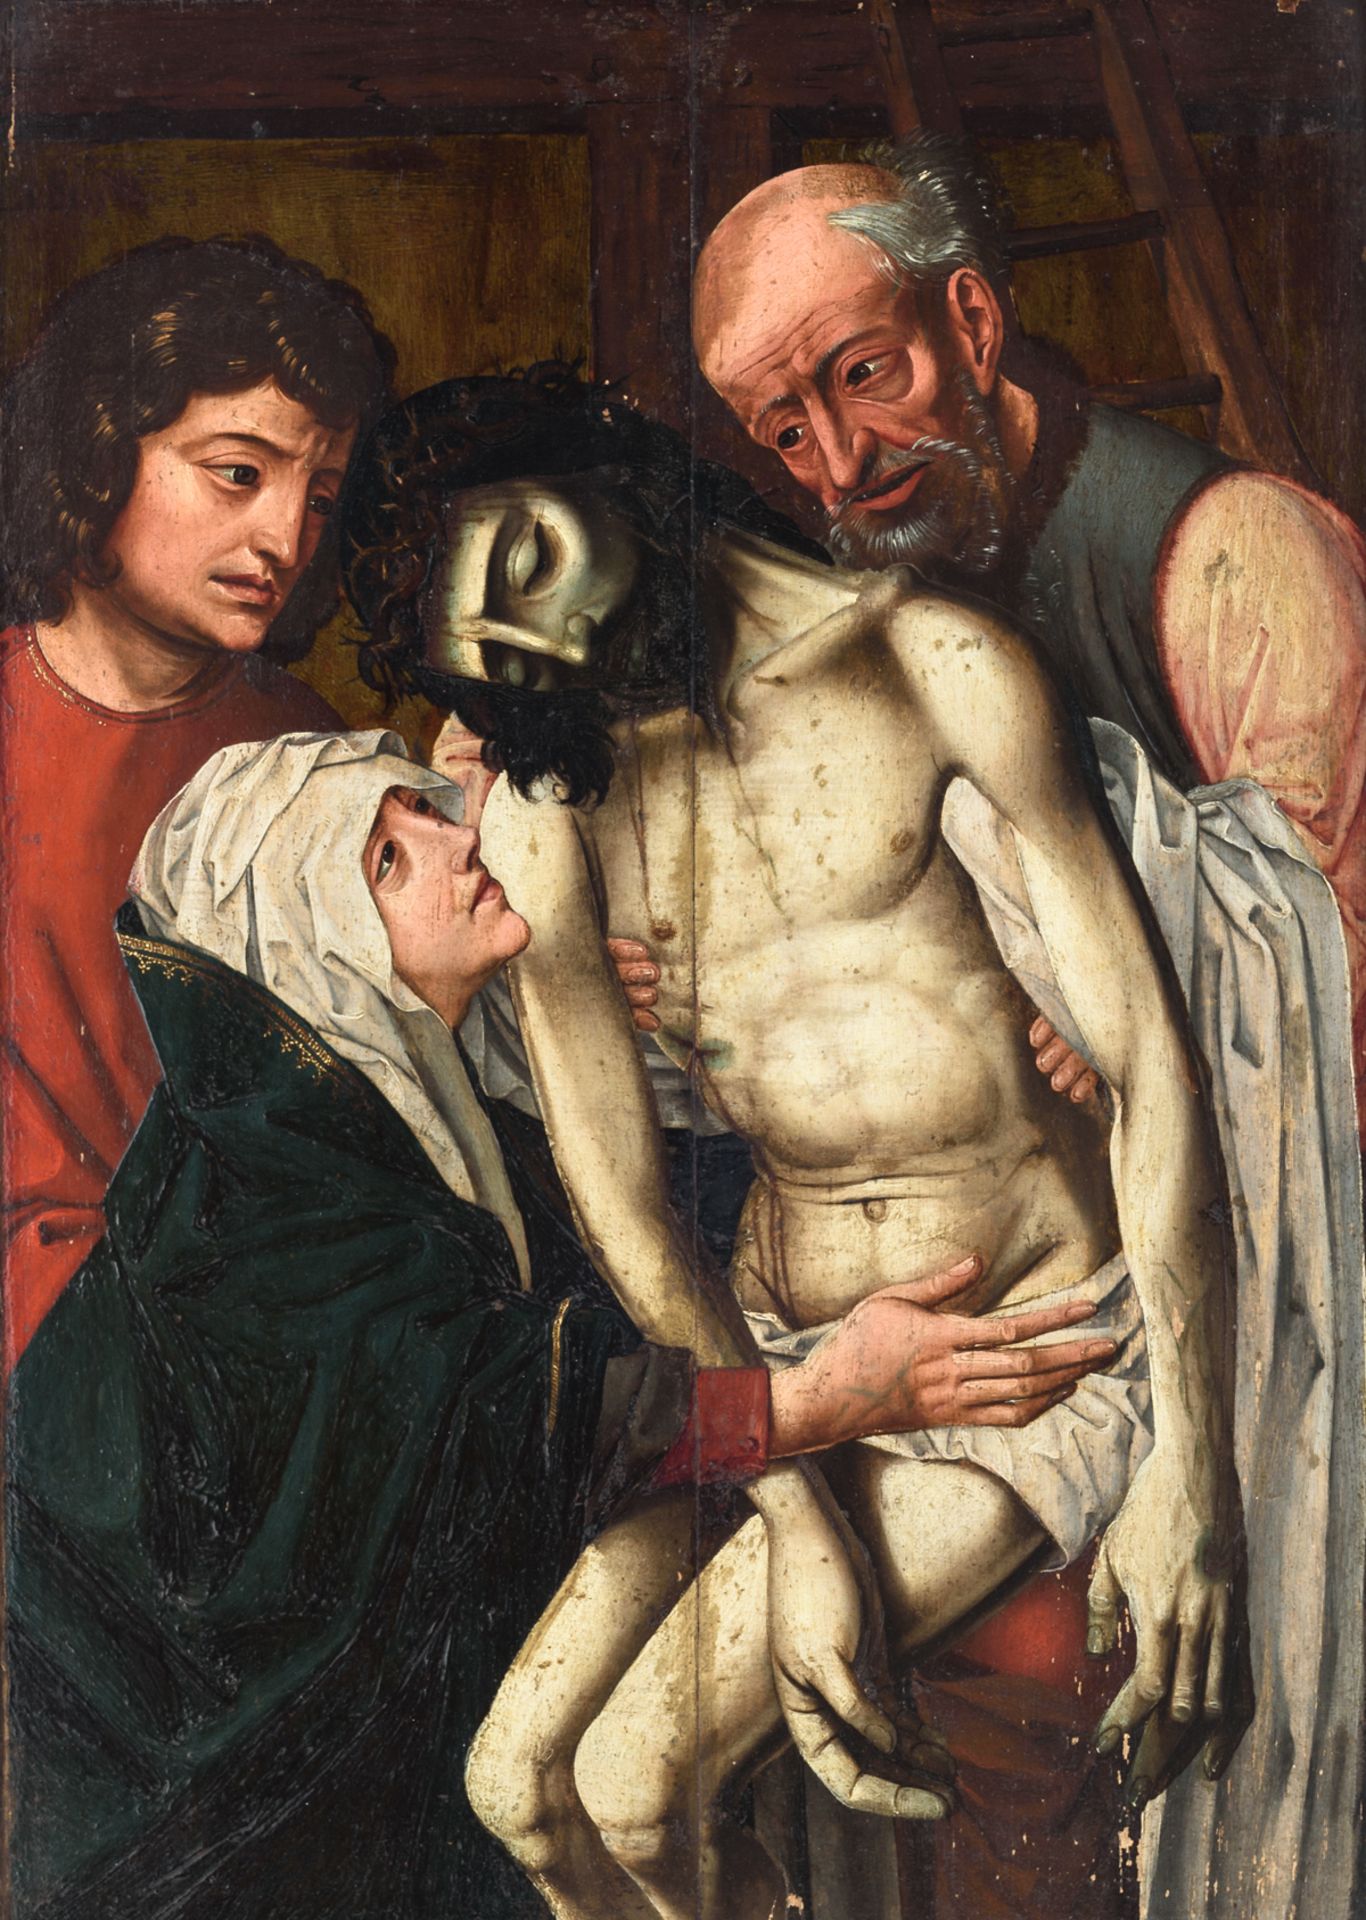 No visible signature, after Rogier van der Weyden 'The Lamentation of Christ', oil on an oak